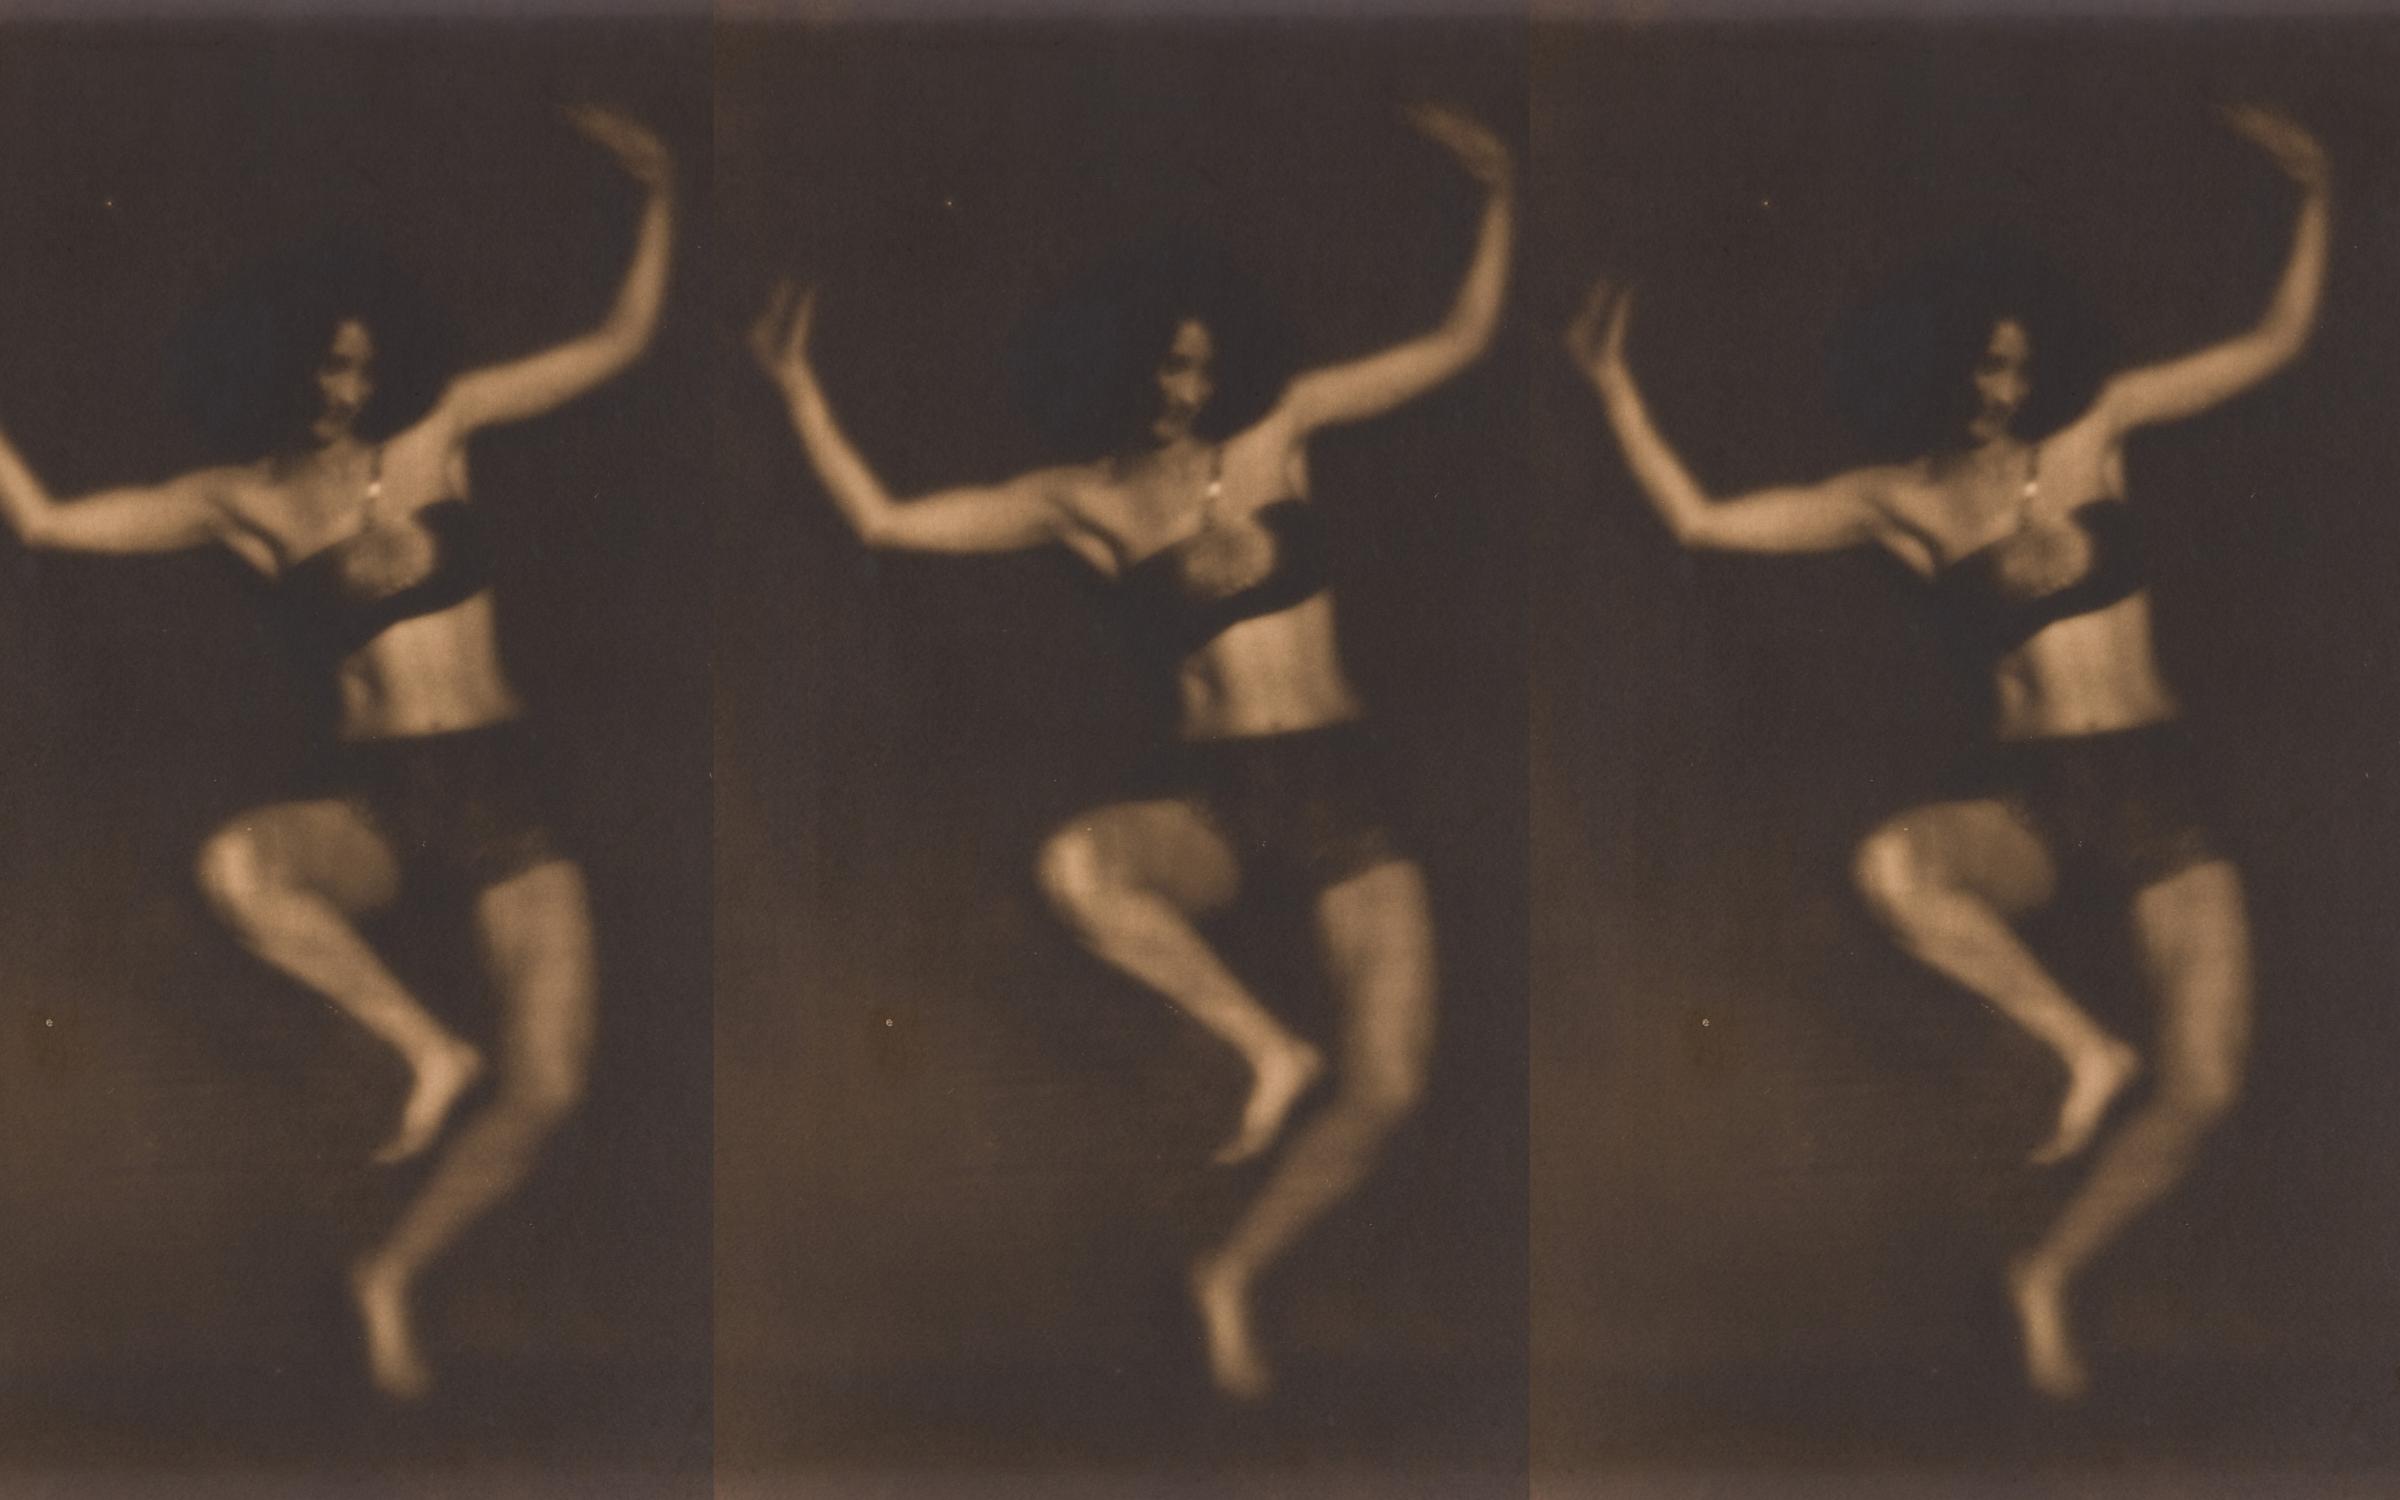 Ben Magid Rabinovitch, (American, 1884-1964), Dance Grotesque, 1922, gelatin silver print, 13 13/16 x 10 7/8 in., gift of the Dr. James E. and Debra Pearl Photograph Collection, UMFA2001.22.60